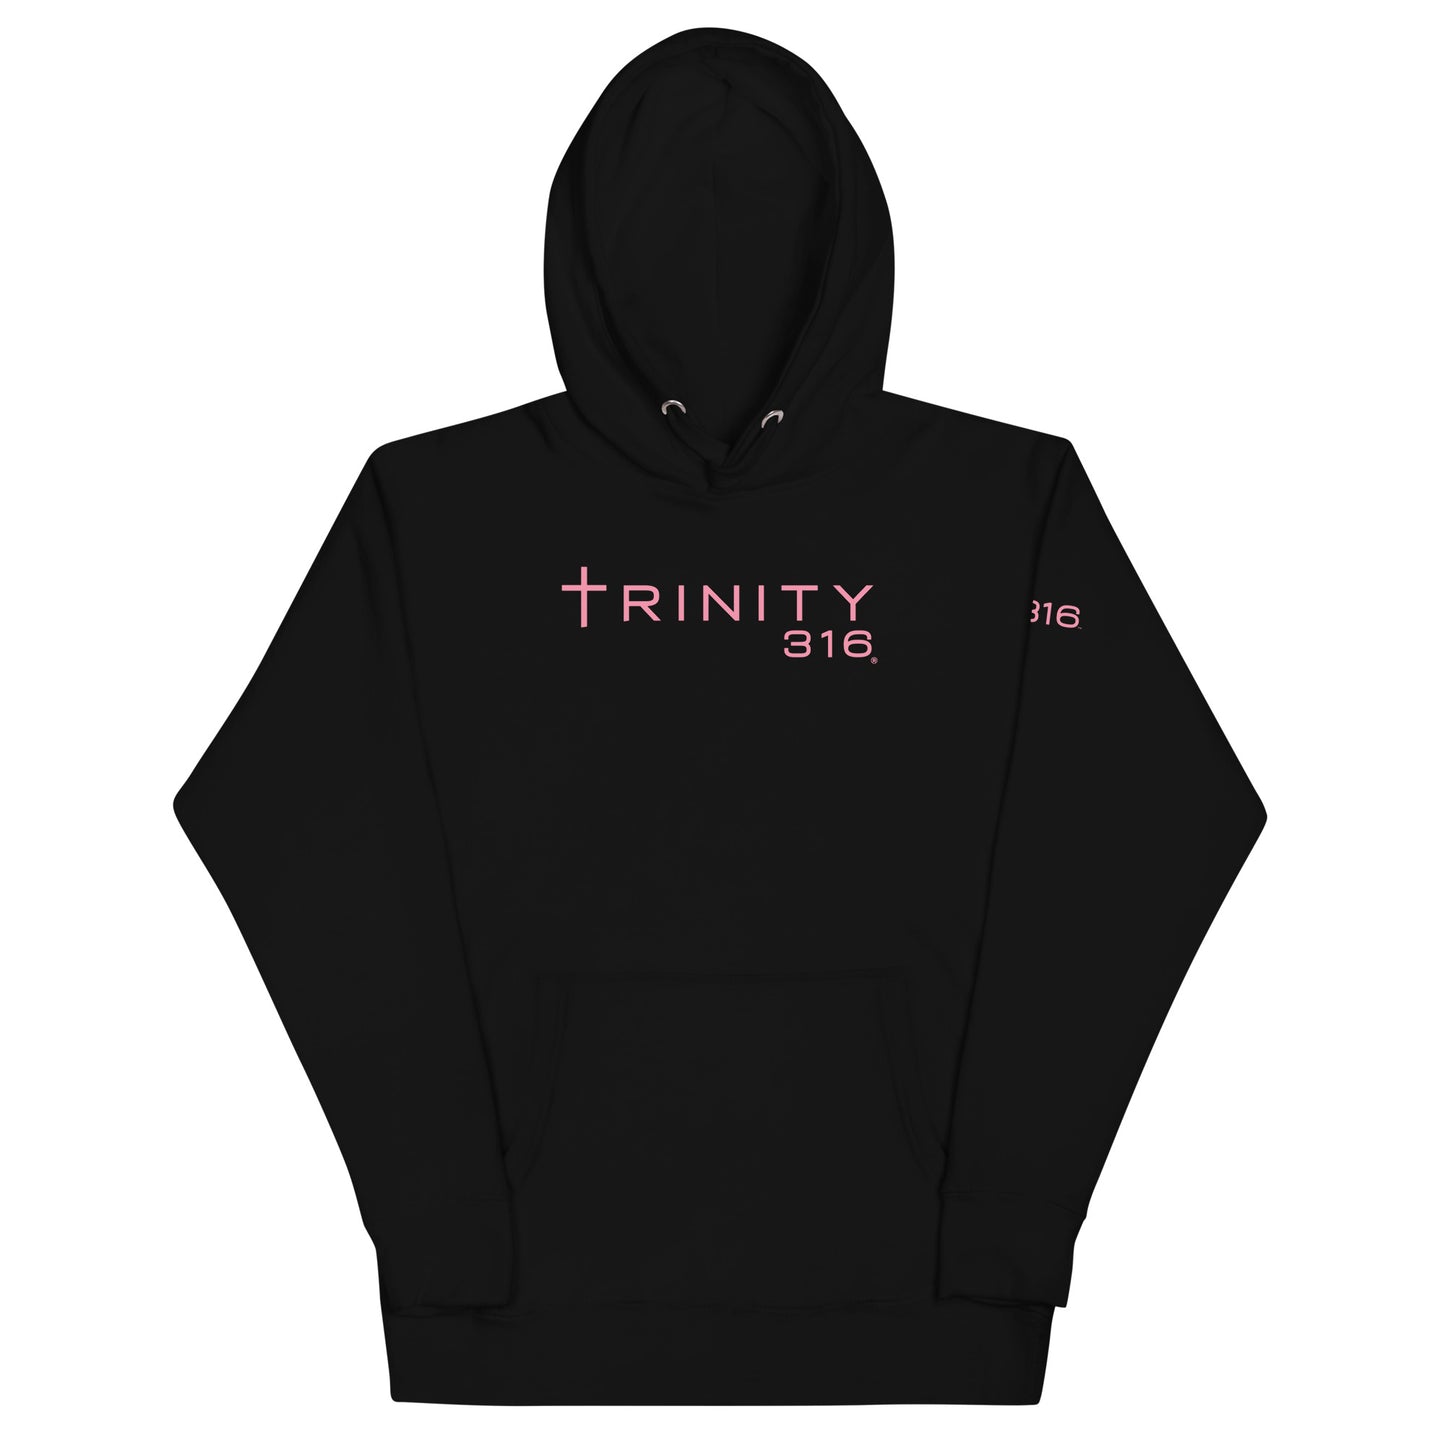 Trinity 316 Hoodie | Pink - Black (Limited Edition)